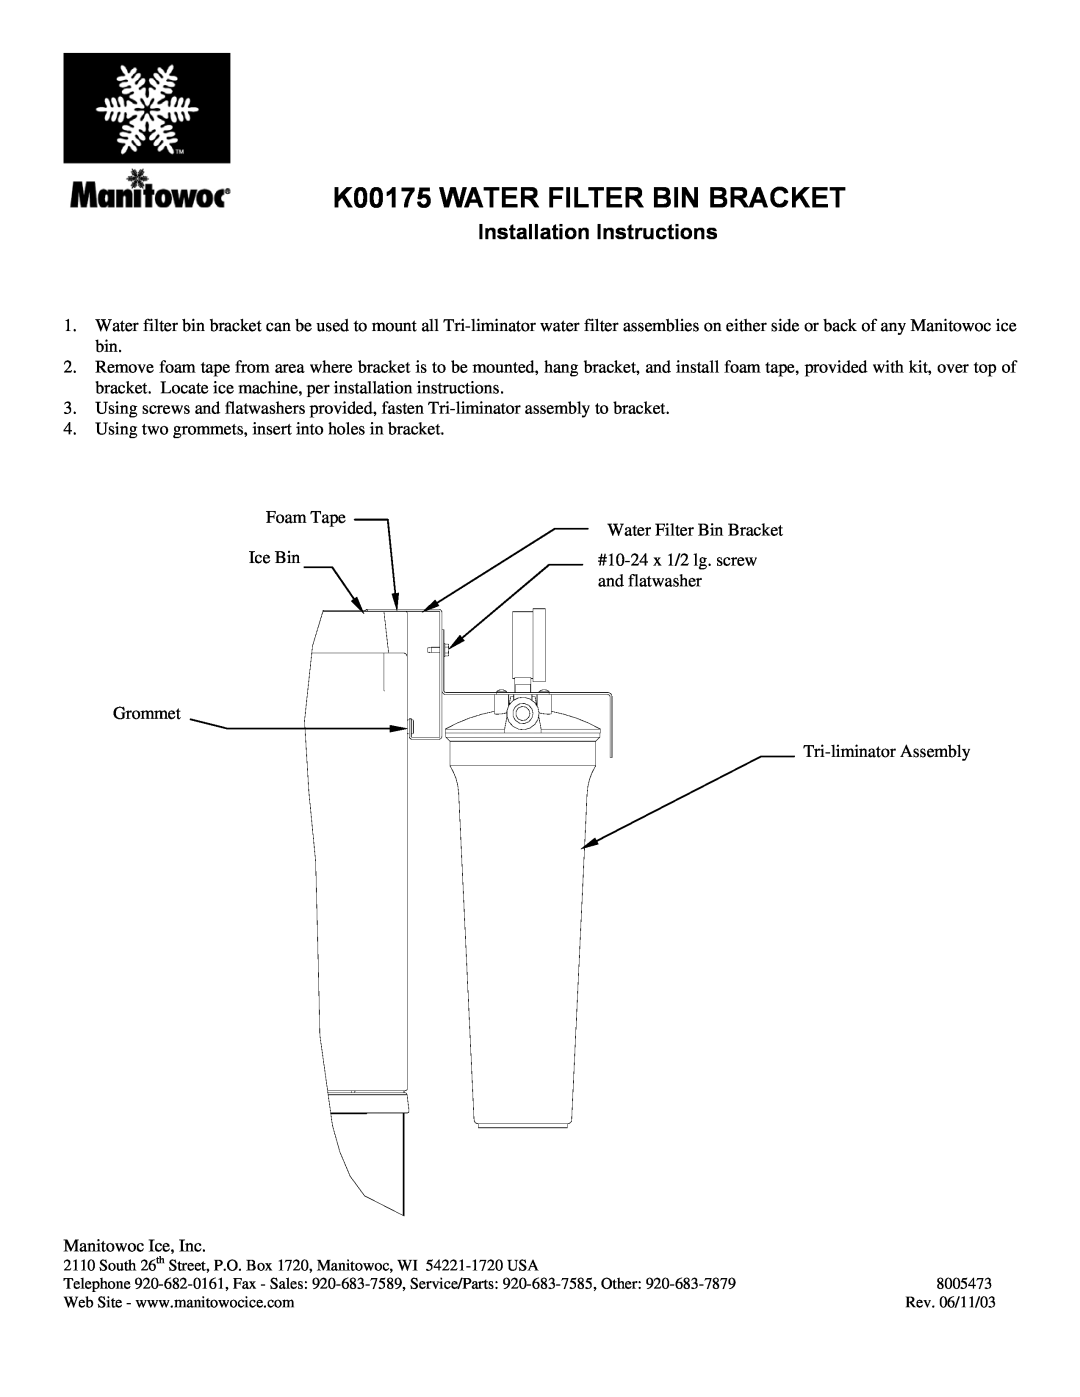 Manitowoc Ice installation instructions K00175 WATER FILTER BIN BRACKET, Installation Instructions 